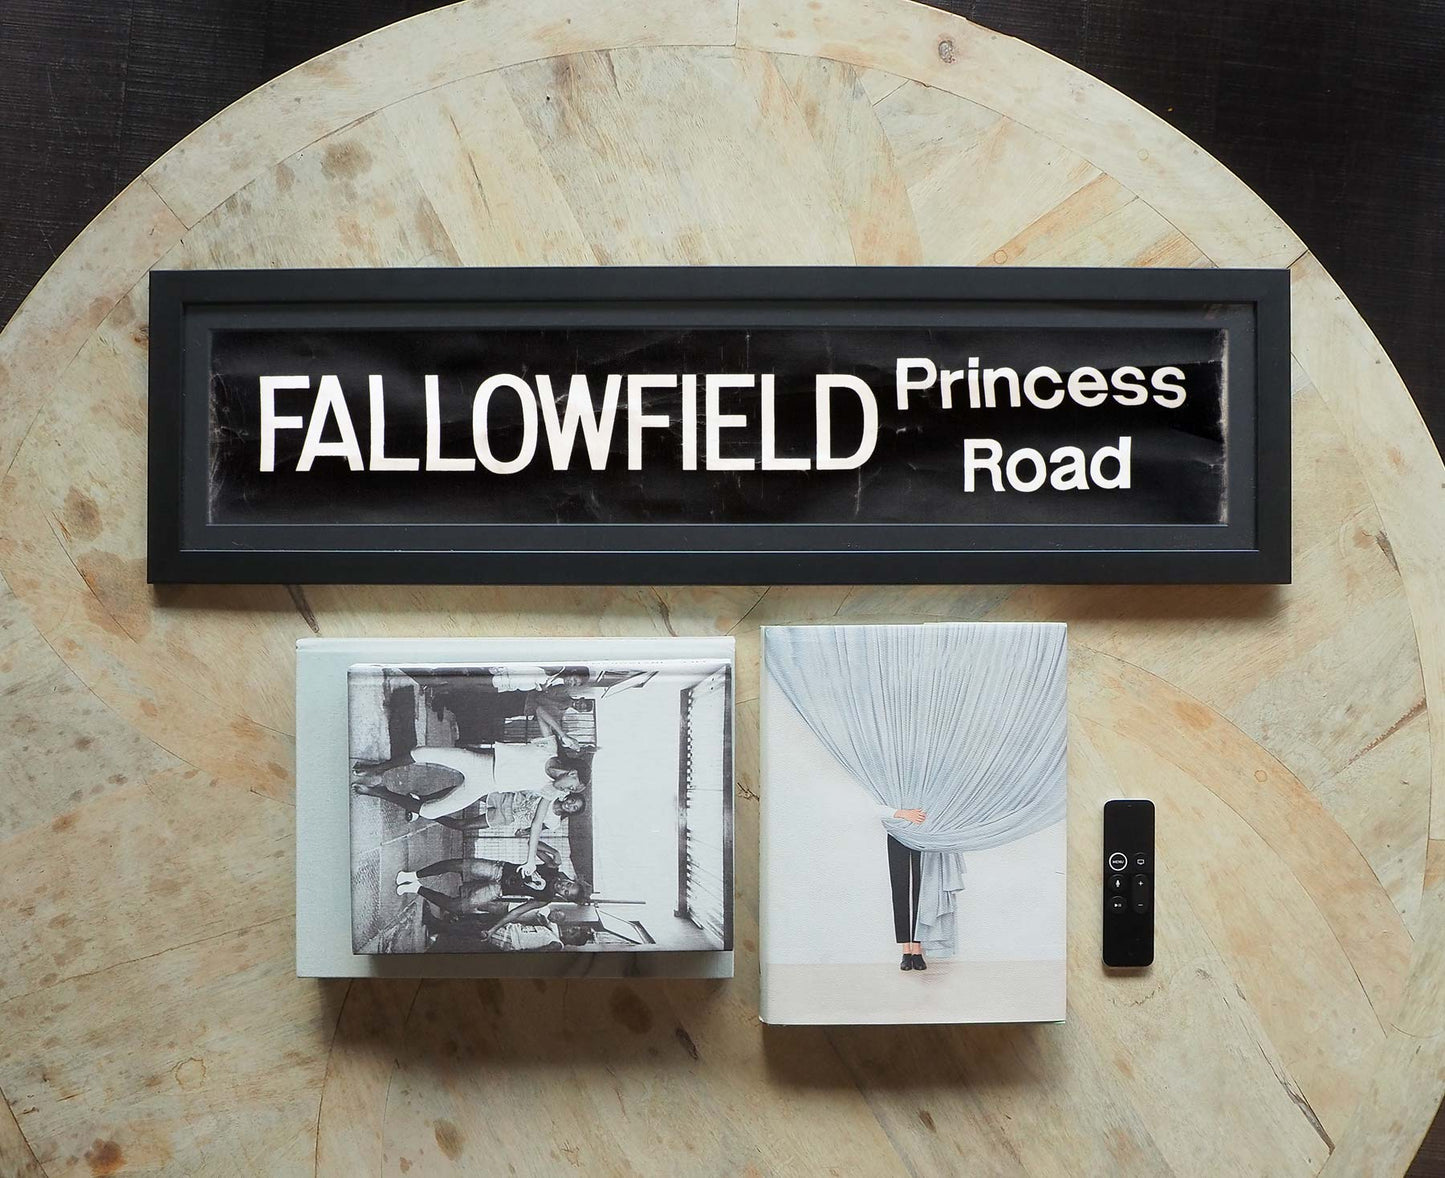 Fallowfield Princess Road Framed Bus Blind